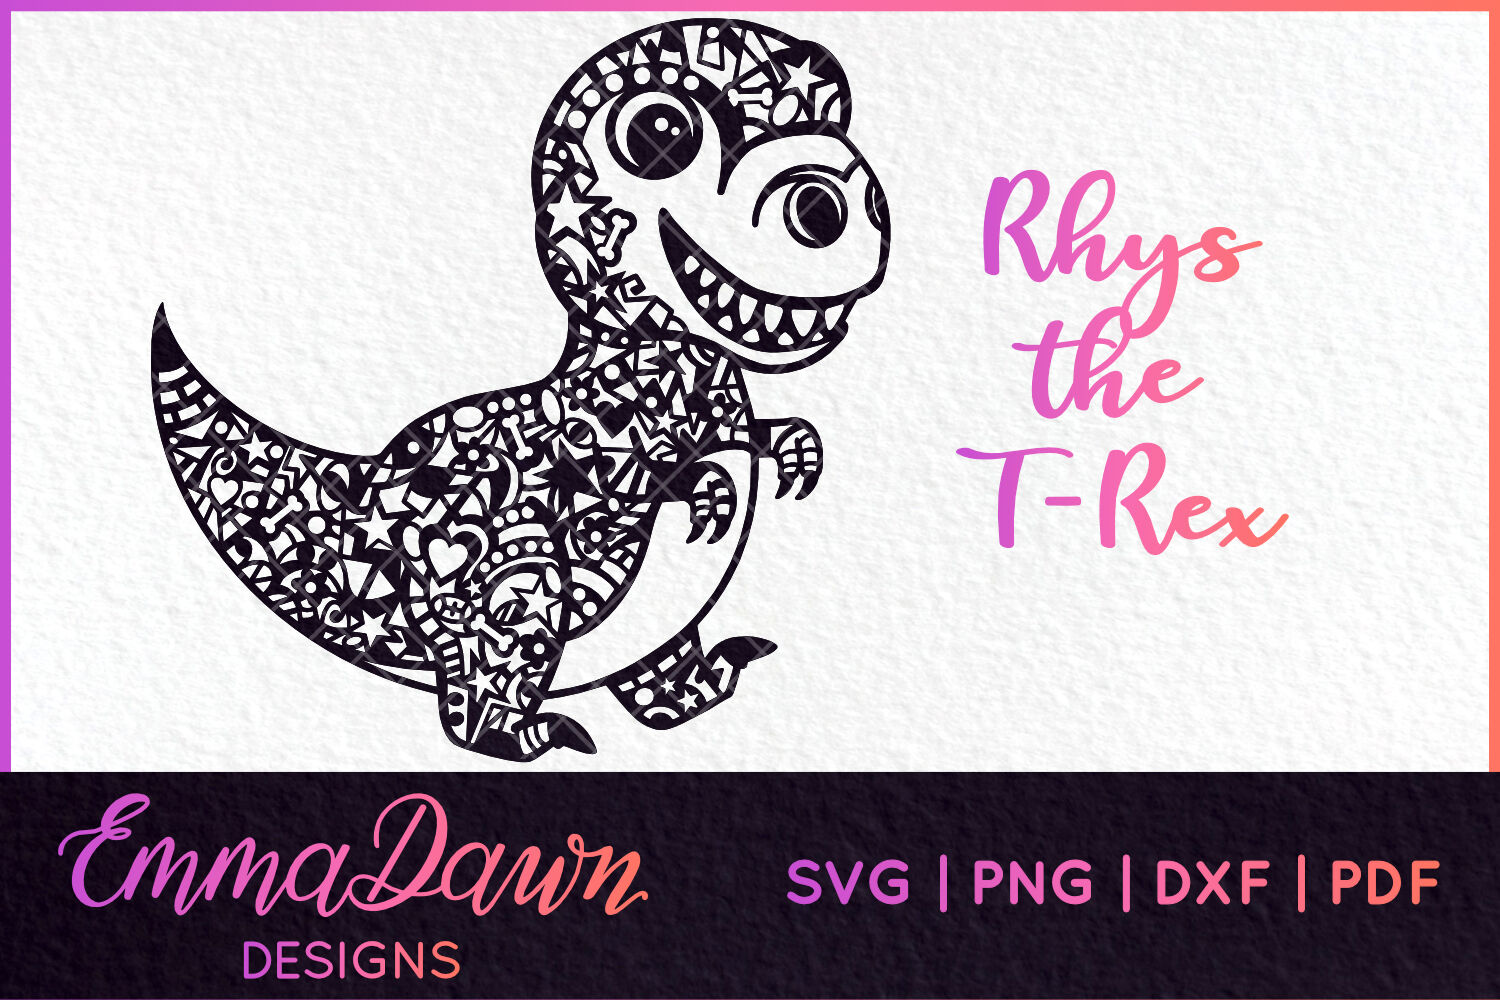 Download Rhys The T Rex Mandala Zentangle Dinosaur Design By Emma Dawn Designs Thehungryjpeg Com